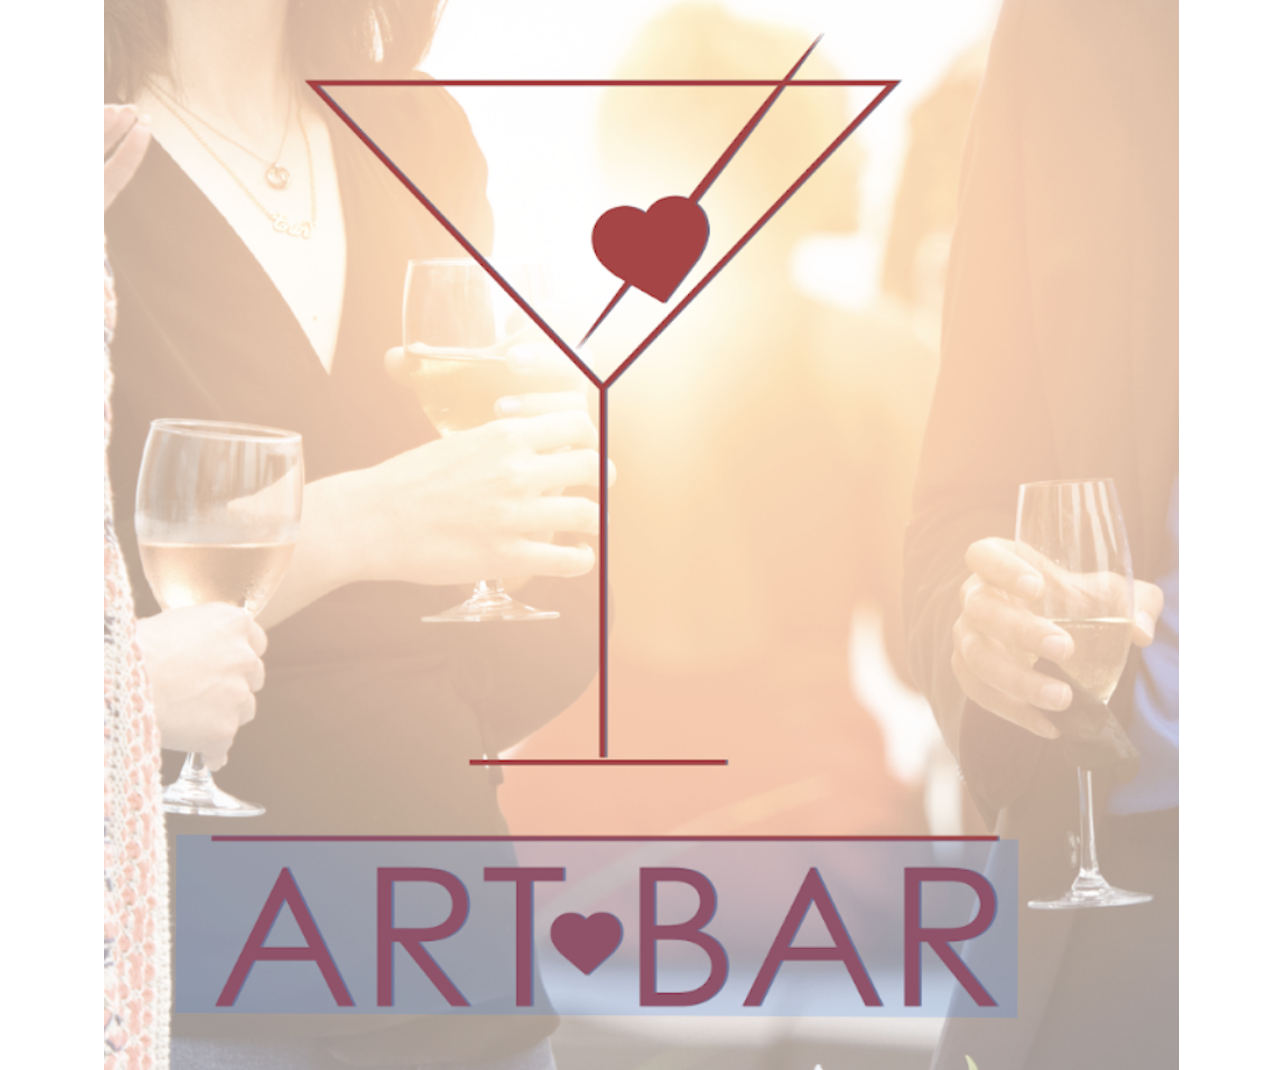 artbar graphic martini glass with heart shaped garnish